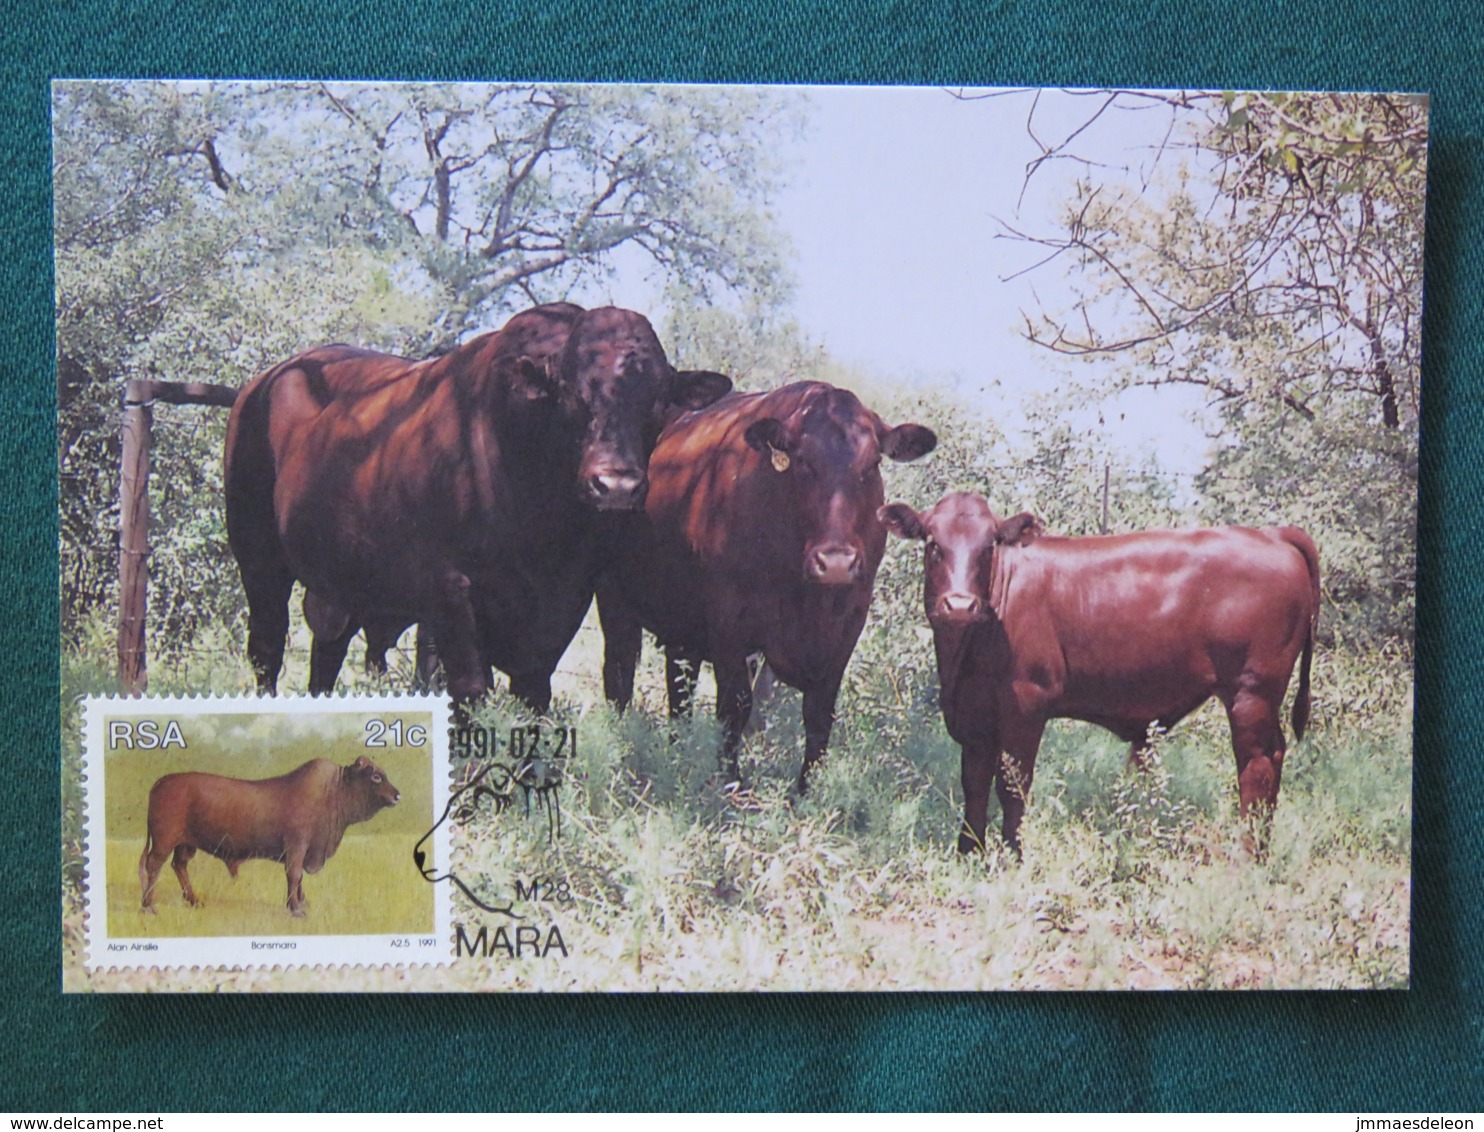 South Africa 1991 FDC Stationery Maxicard "cows - Bonsmara" - Afrique Du Sud